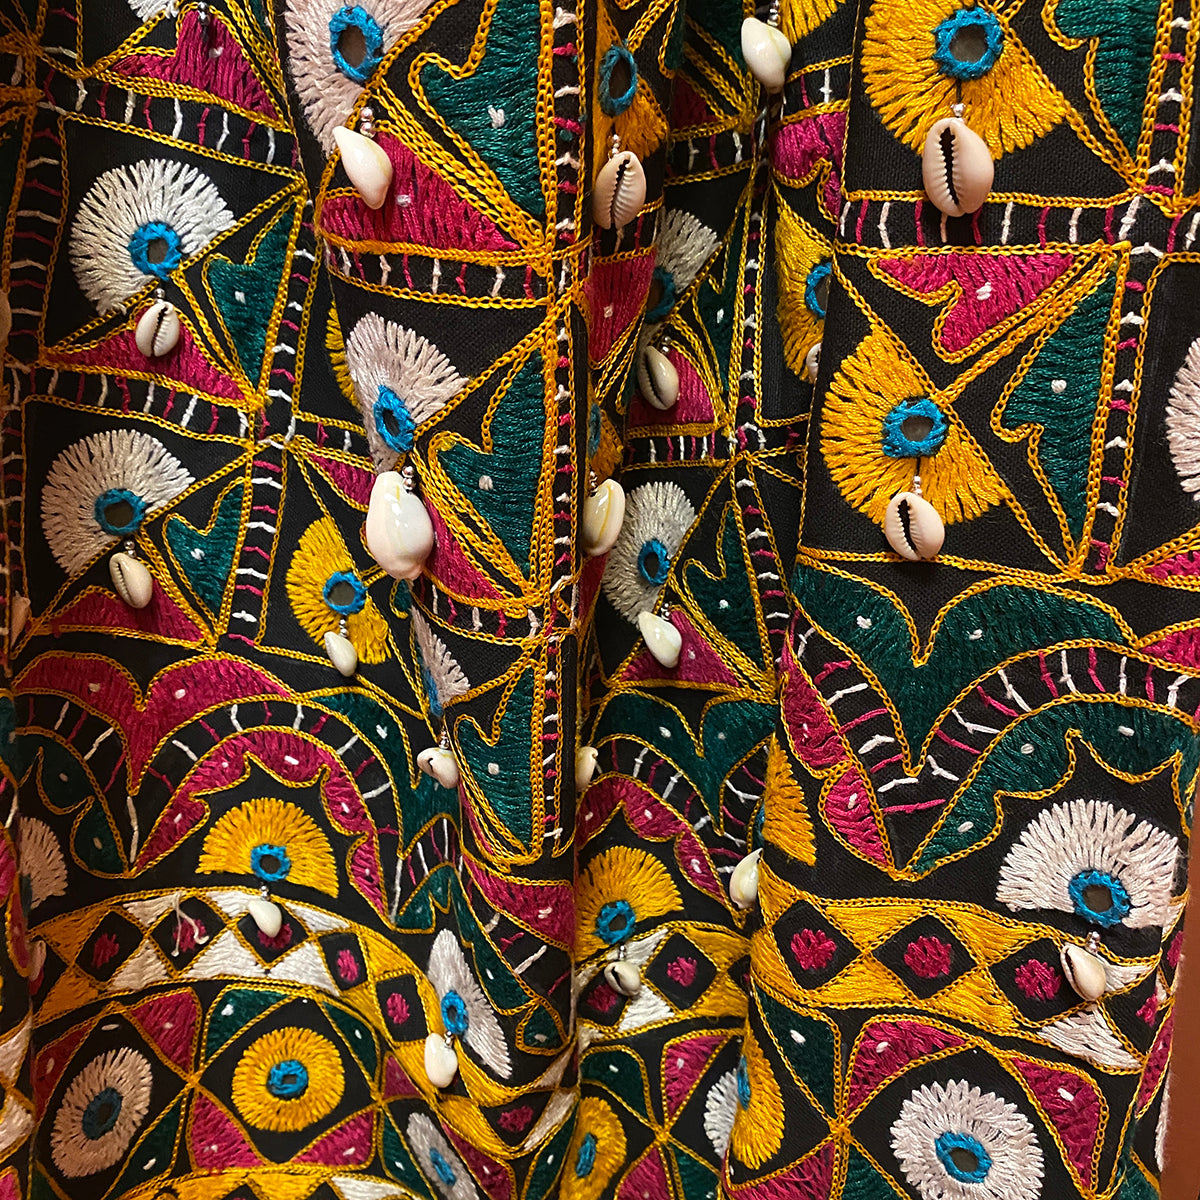 Vintage Garba Skirt Set - Vintage India NYC